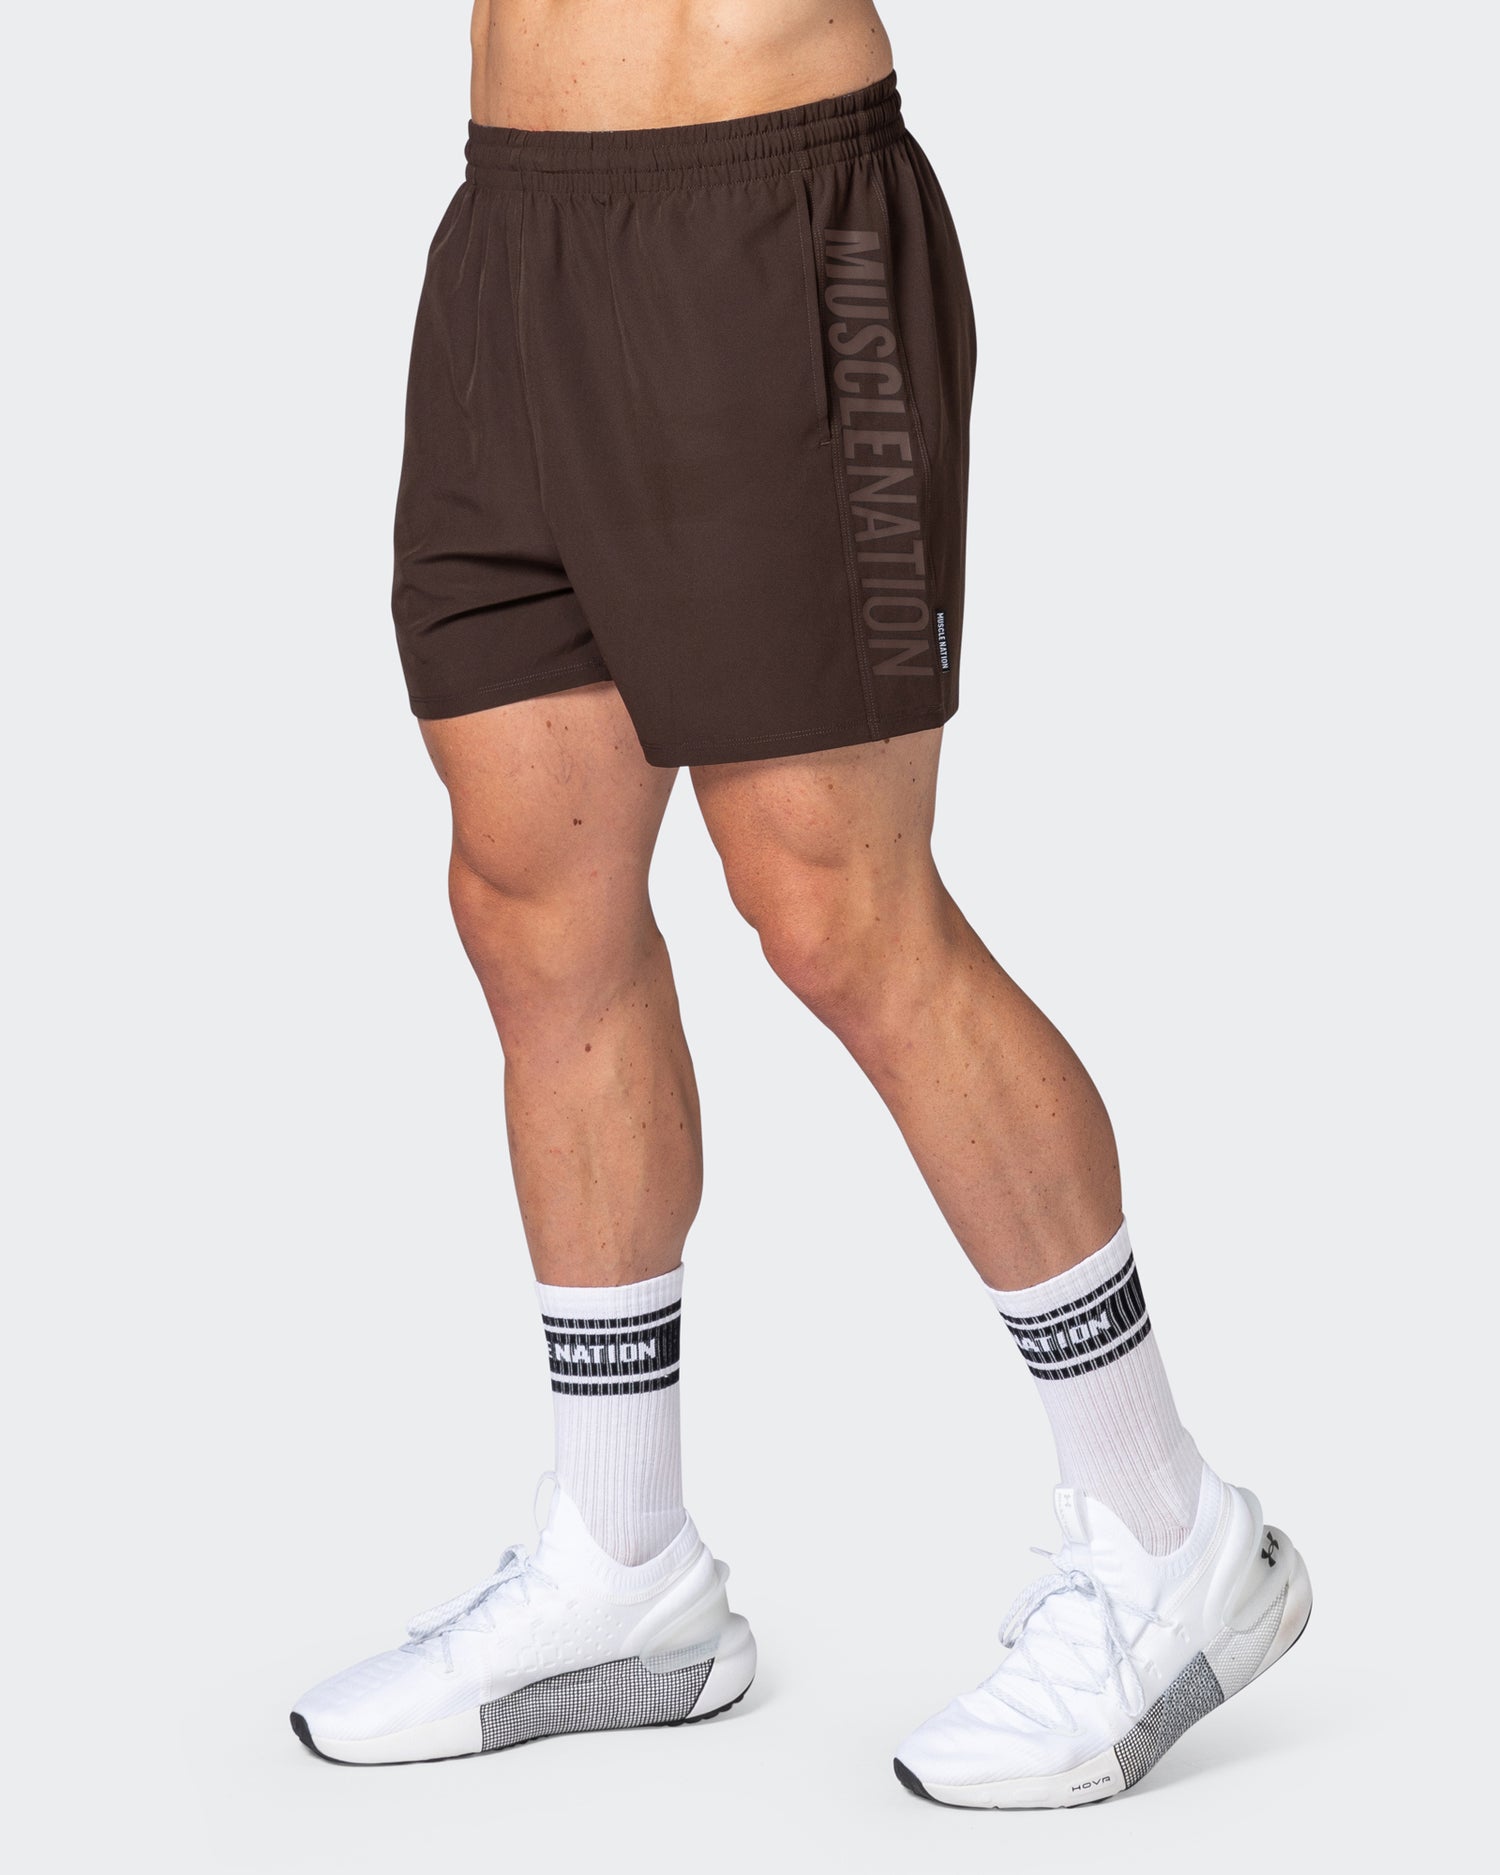 Function 4" Shorts - Cocoa